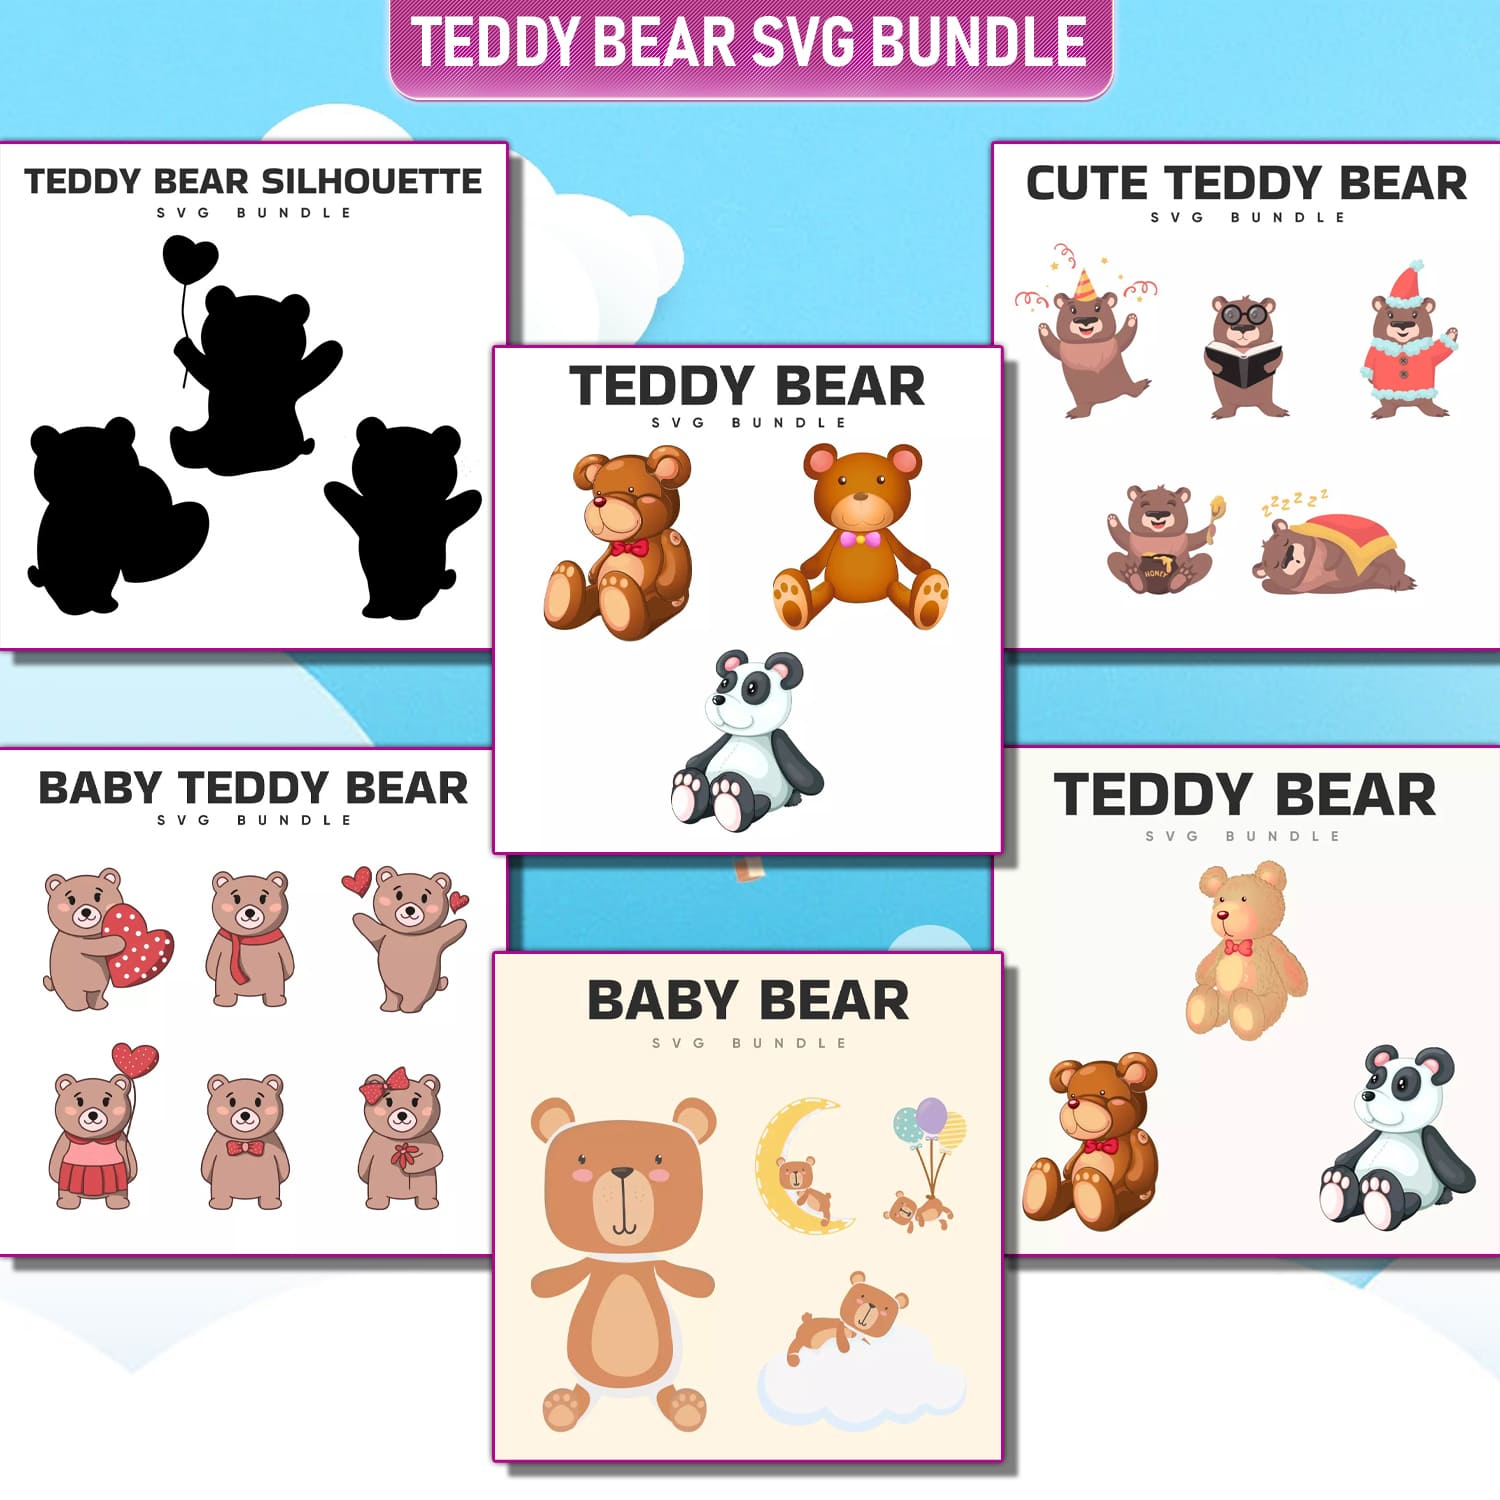 Teddy bear svg bundle.